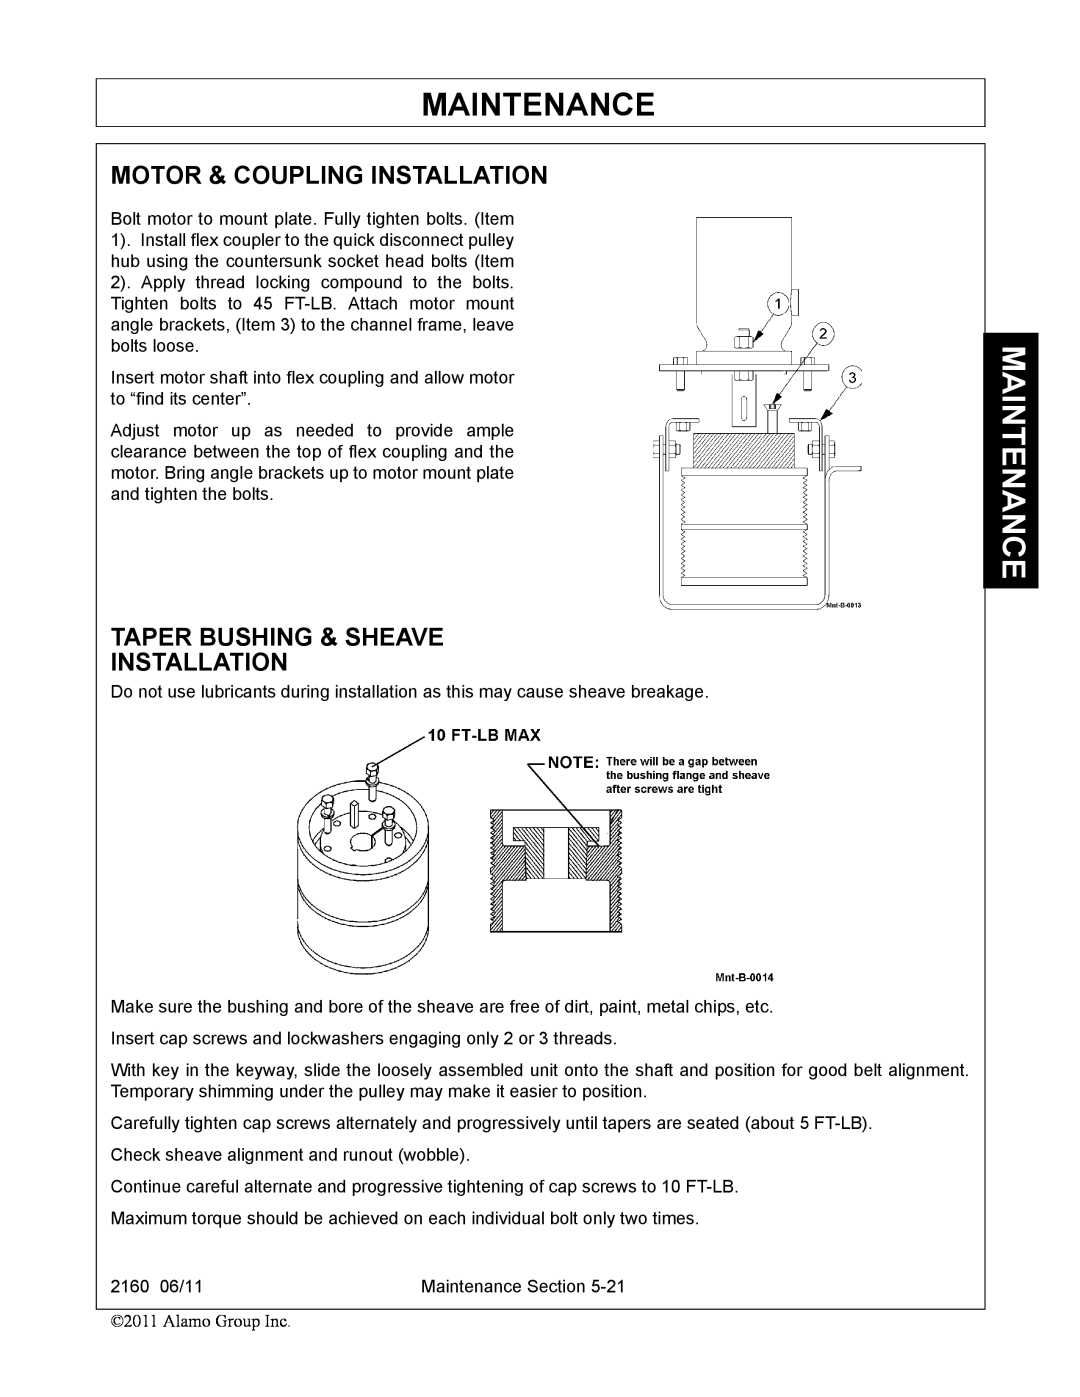 Servis-Rhino 2160 manual Motor & Coupling Installation, Taper Bushing & Sheave Installation, Maintenance 